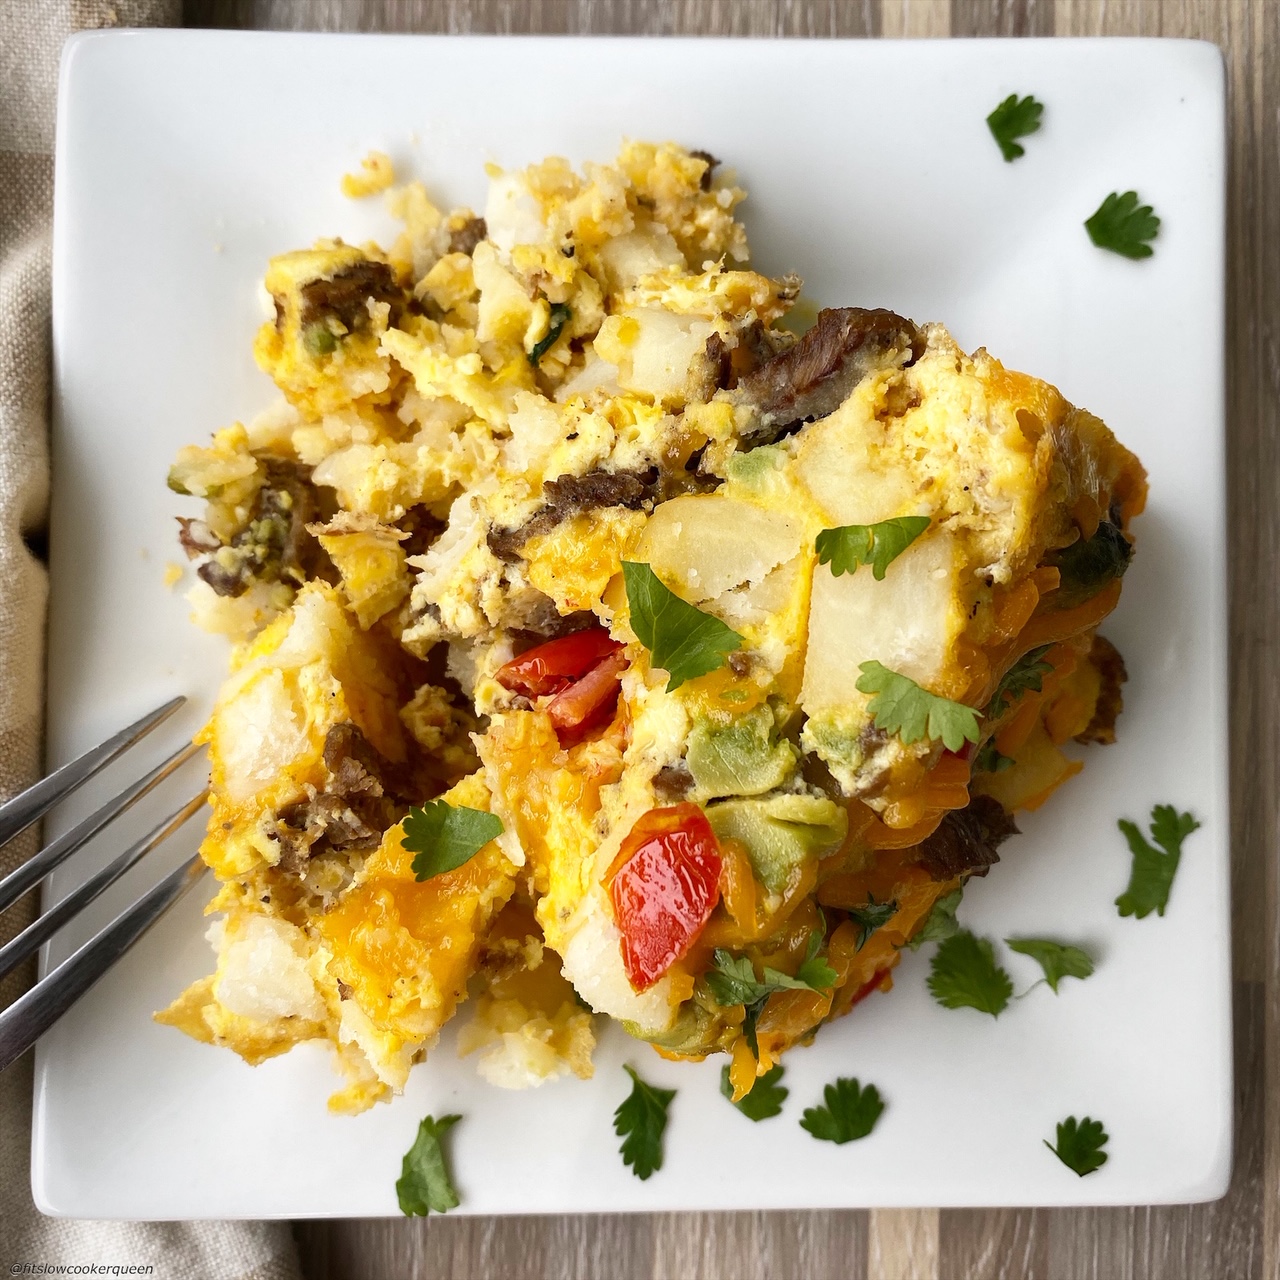 https://fitslowcookerqueen.com/wp-content/uploads/2020/06/Slow-Cooker-California-Burrito-Breakfast-Casserole-2.jpg